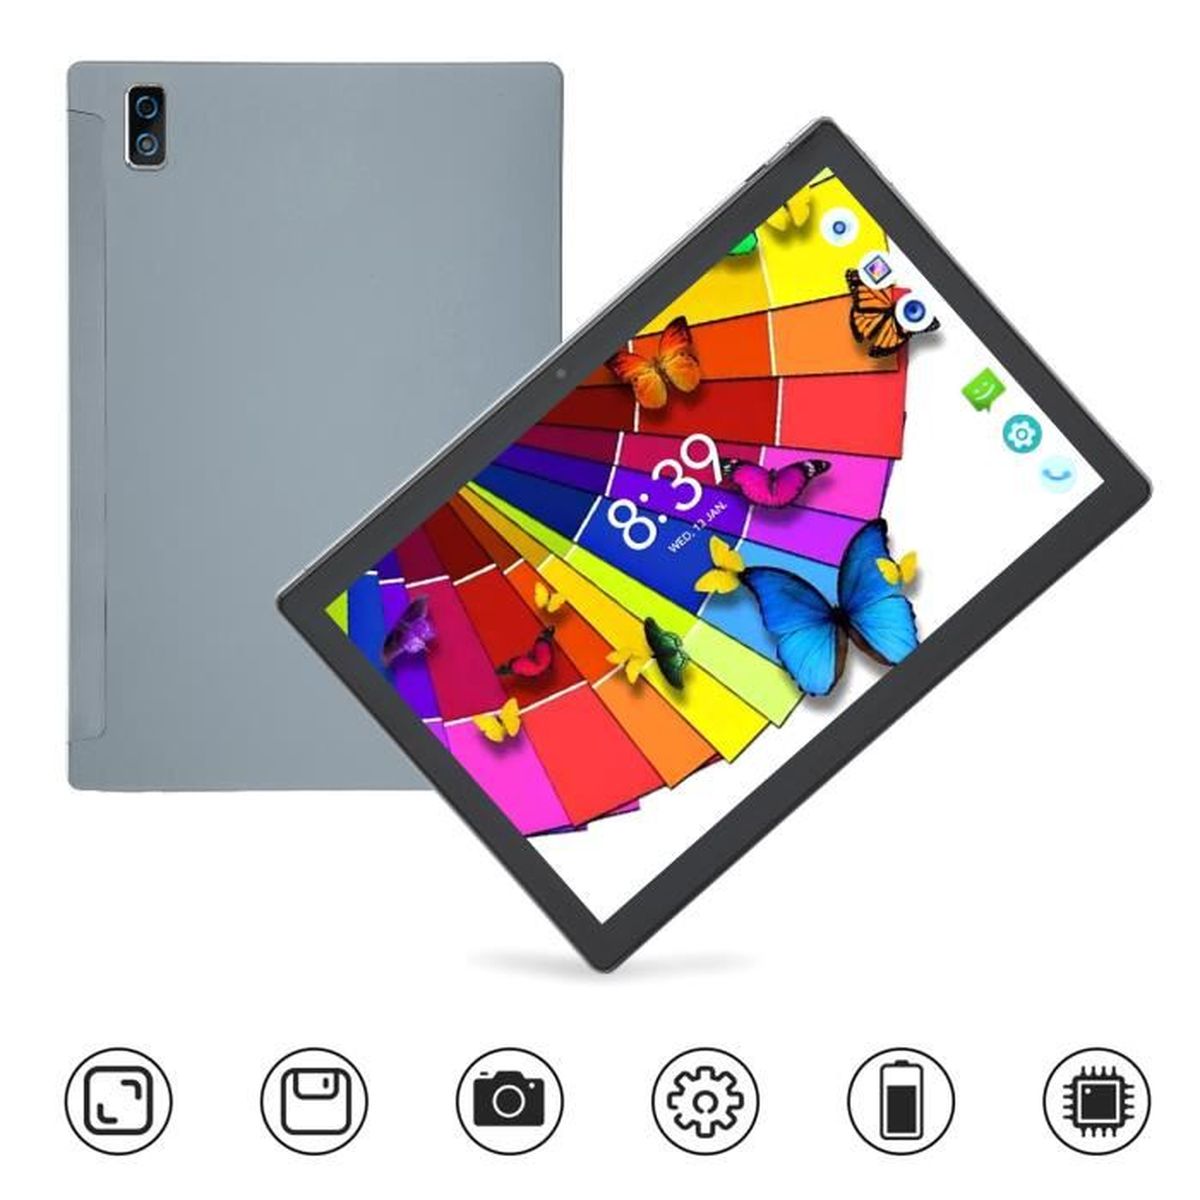 Logicom Logikids 5 - Tablette - Android 8.1 (Oreo) Go Edition - 16 Go - 7  (1024 x 600) - Logement microSD - Tablette tactile - Achat & prix